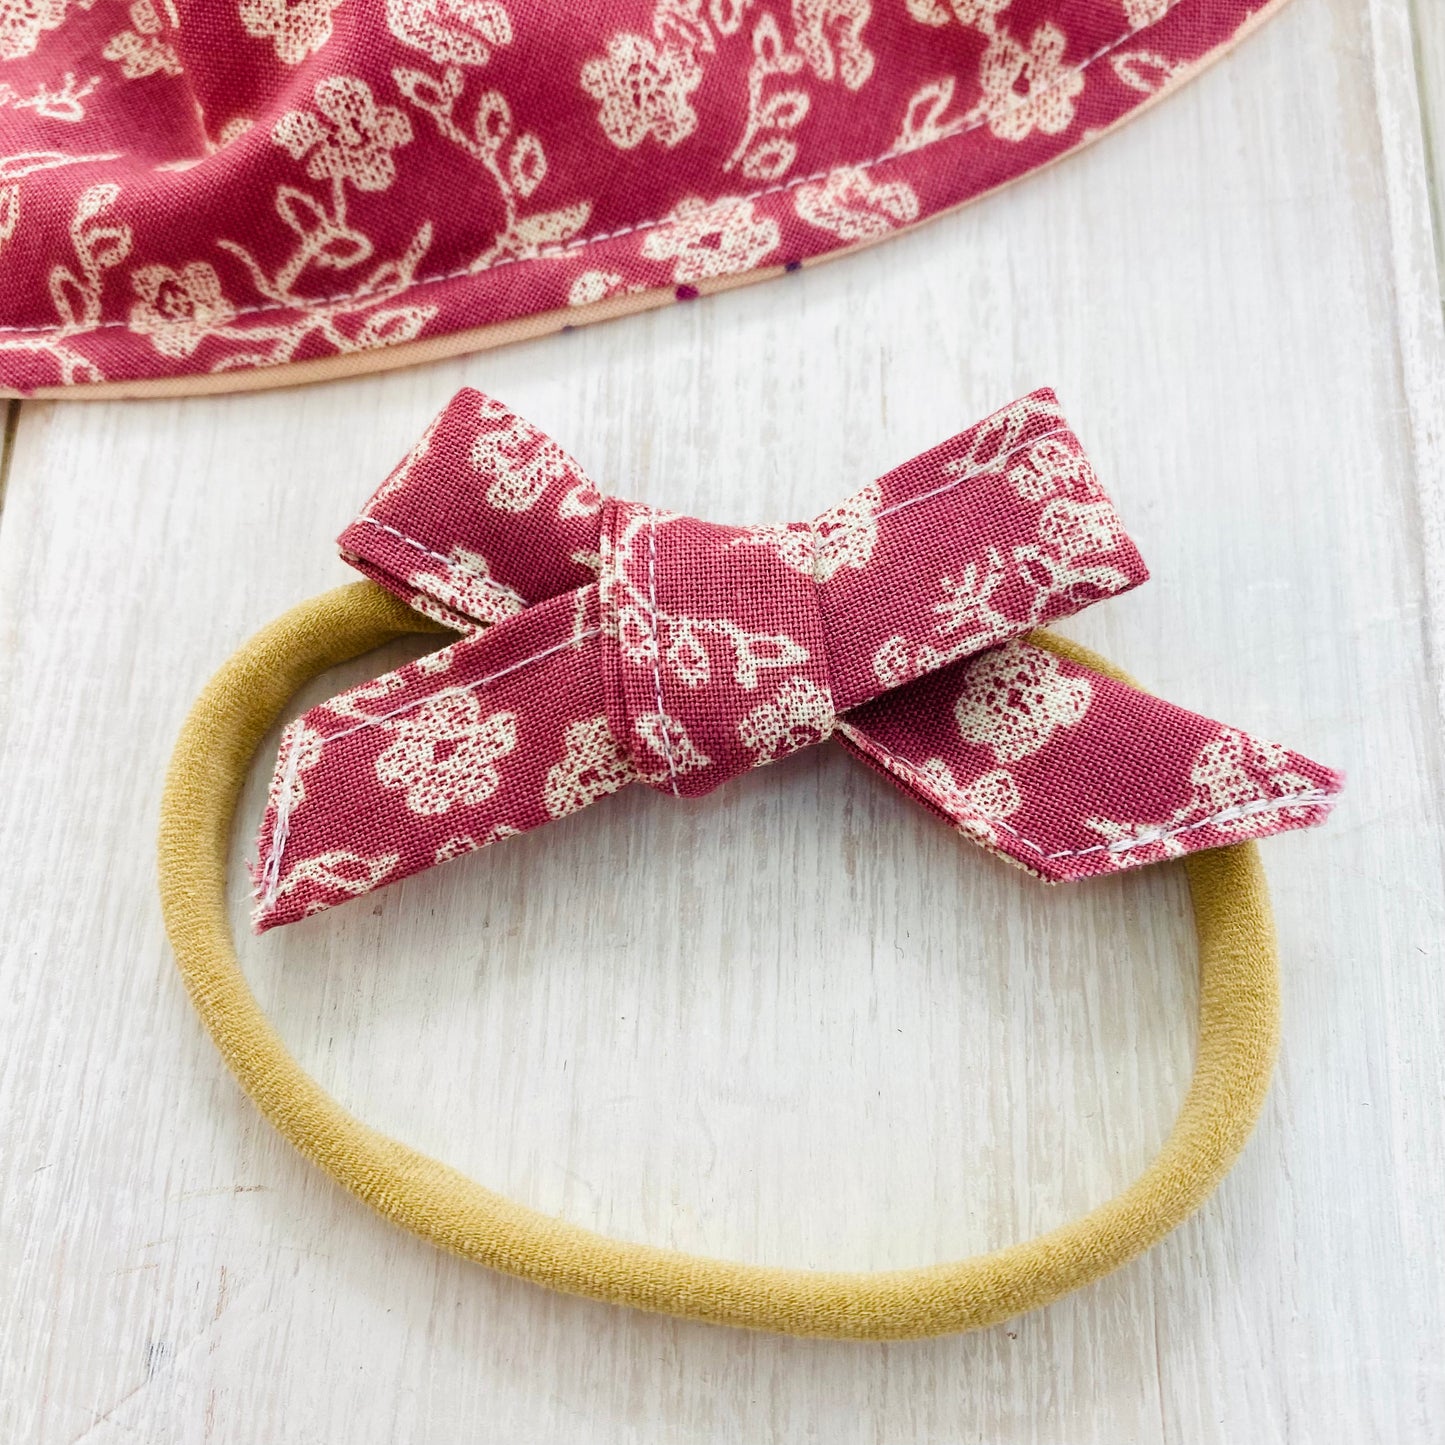 Primrose pink handtied bow on super soft baby headband.